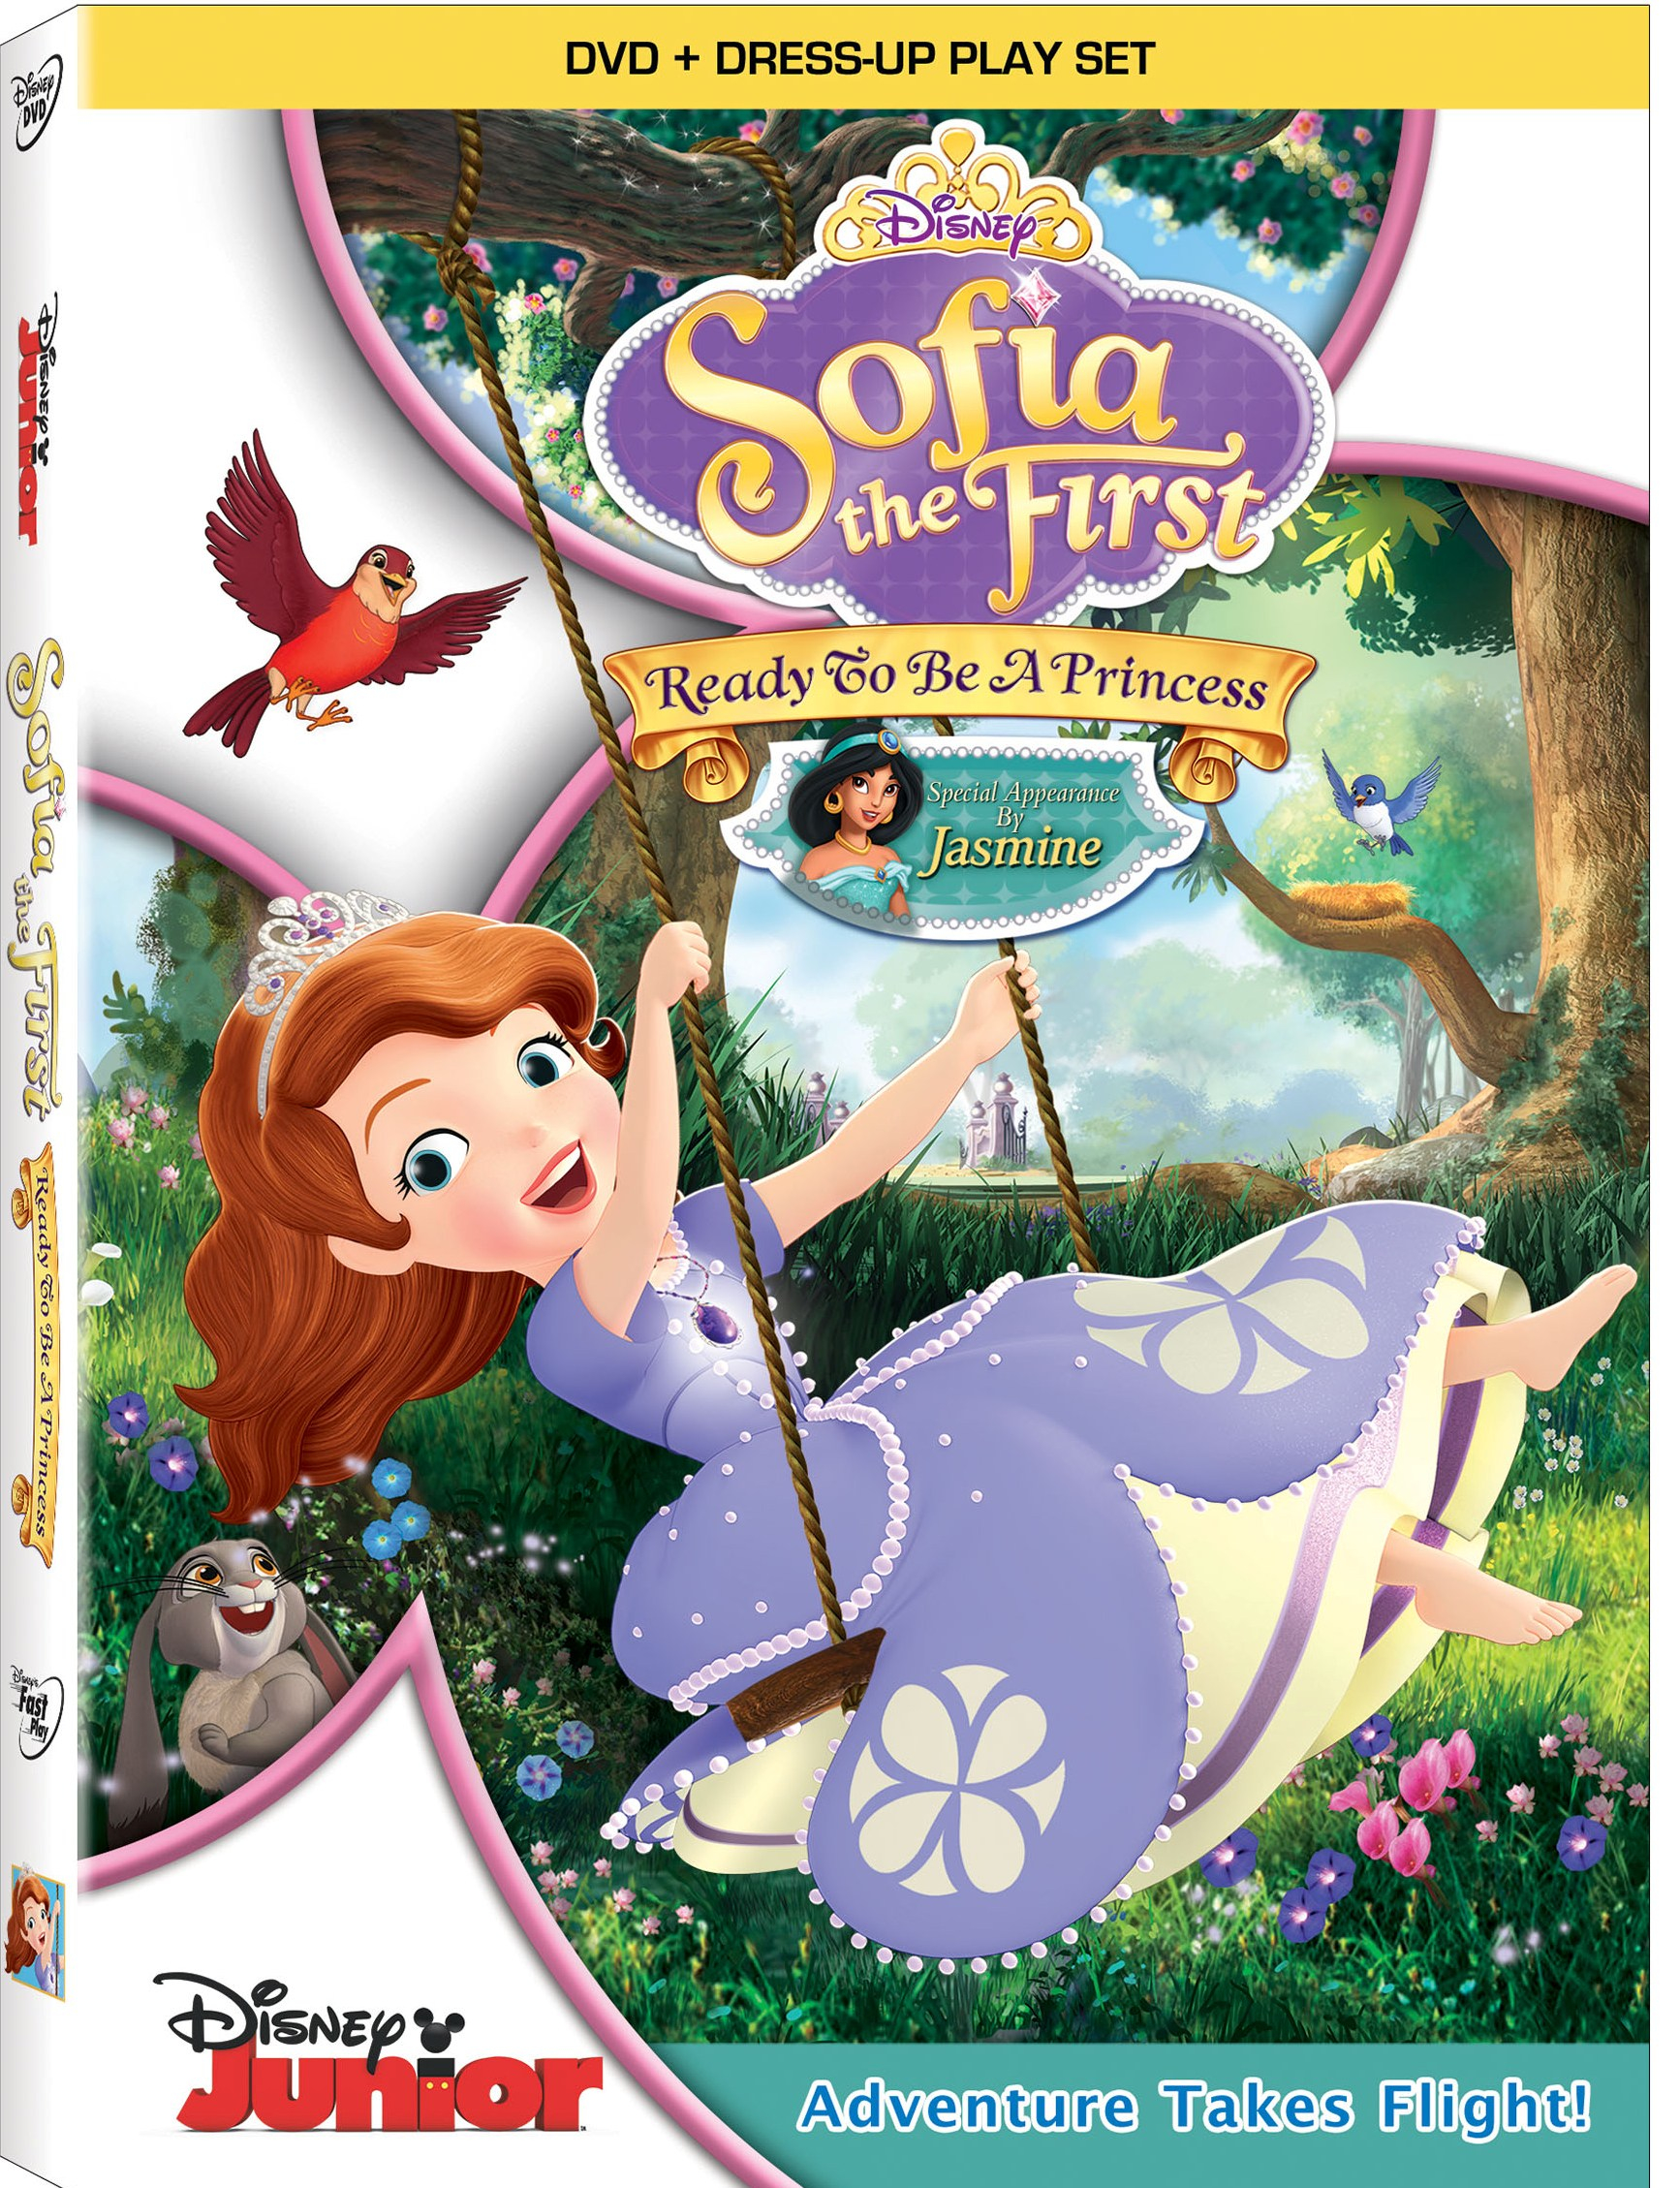 Disney's "Sofia The First Ready To Be A Princess" DVD